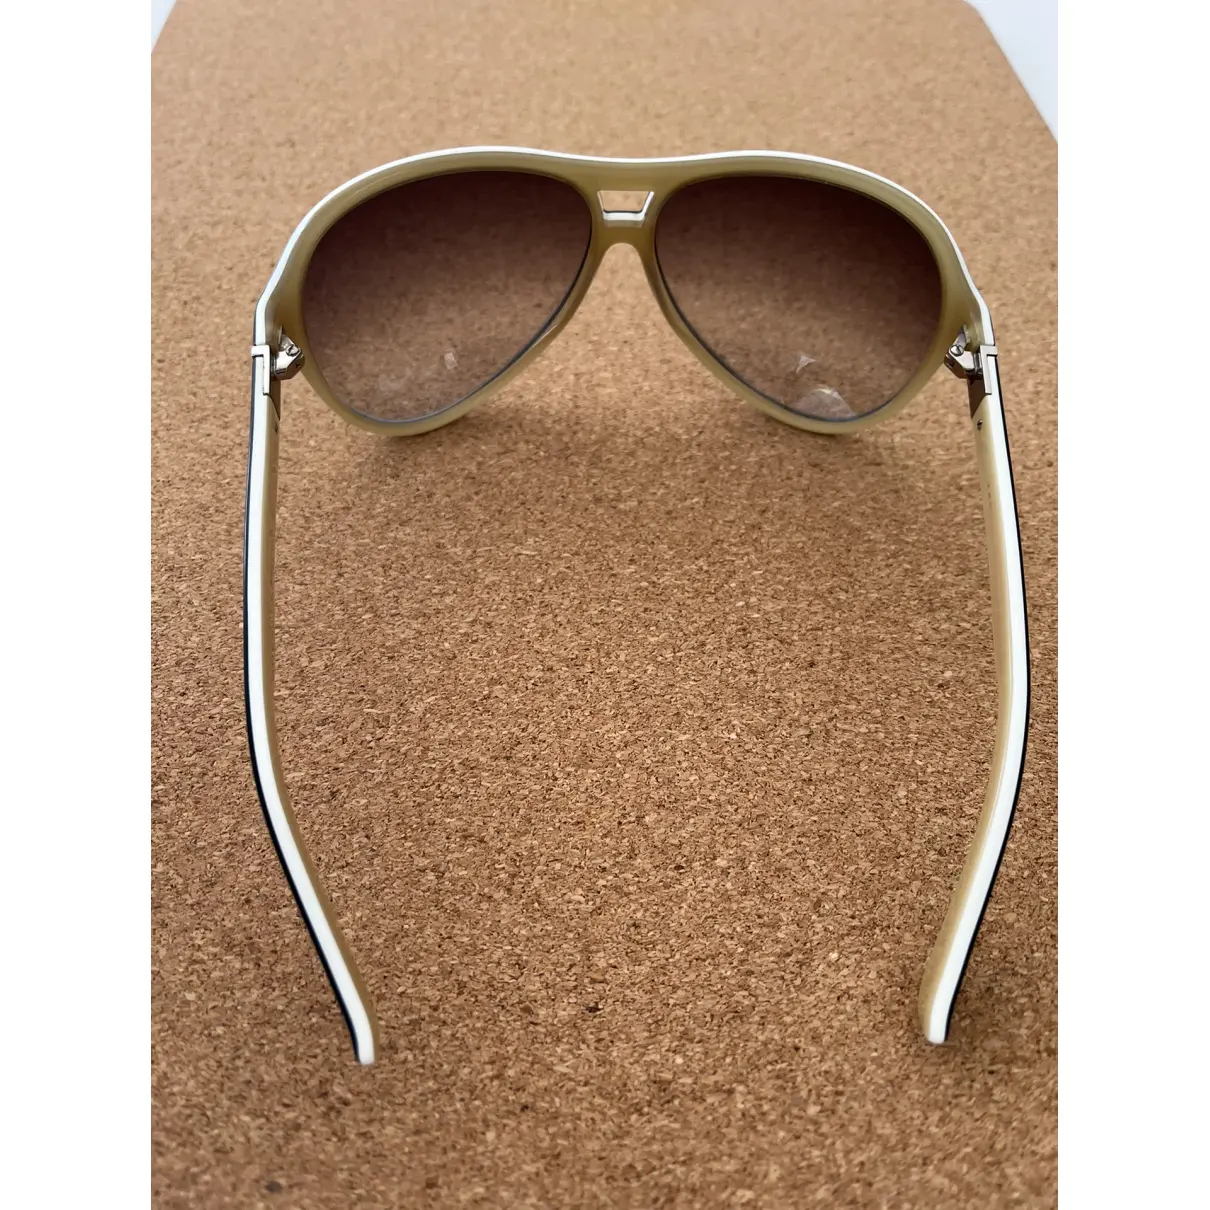 Luxury Marc Jacobs Sunglasses Women